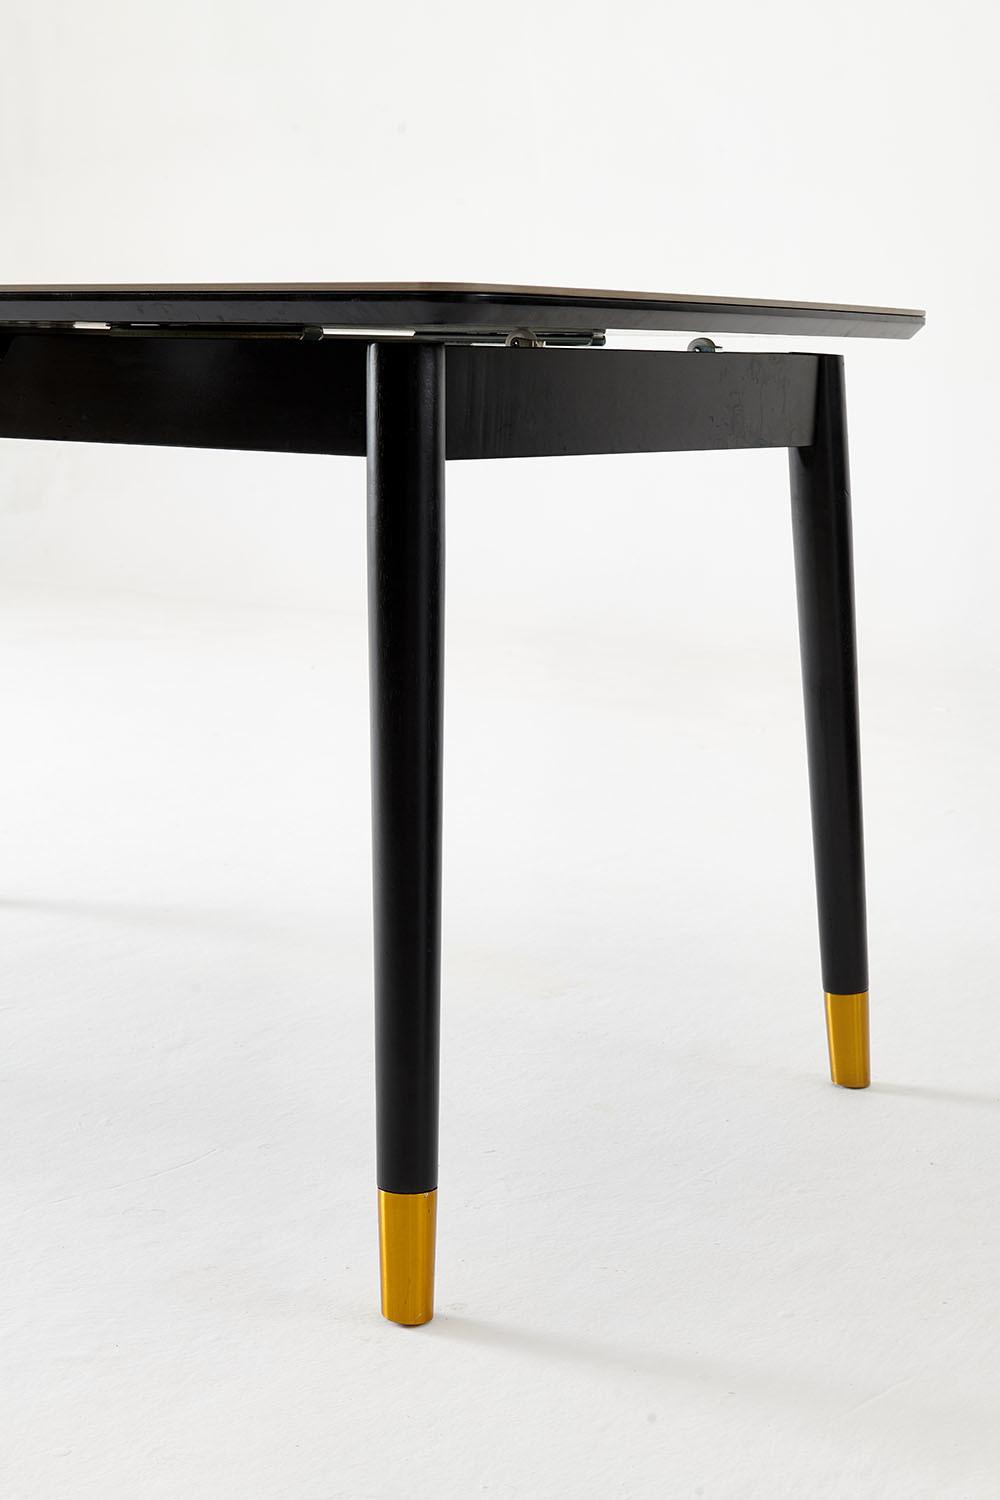 Carbon Steel Legs Restaurant Furniture Pandora Marble Dining Table